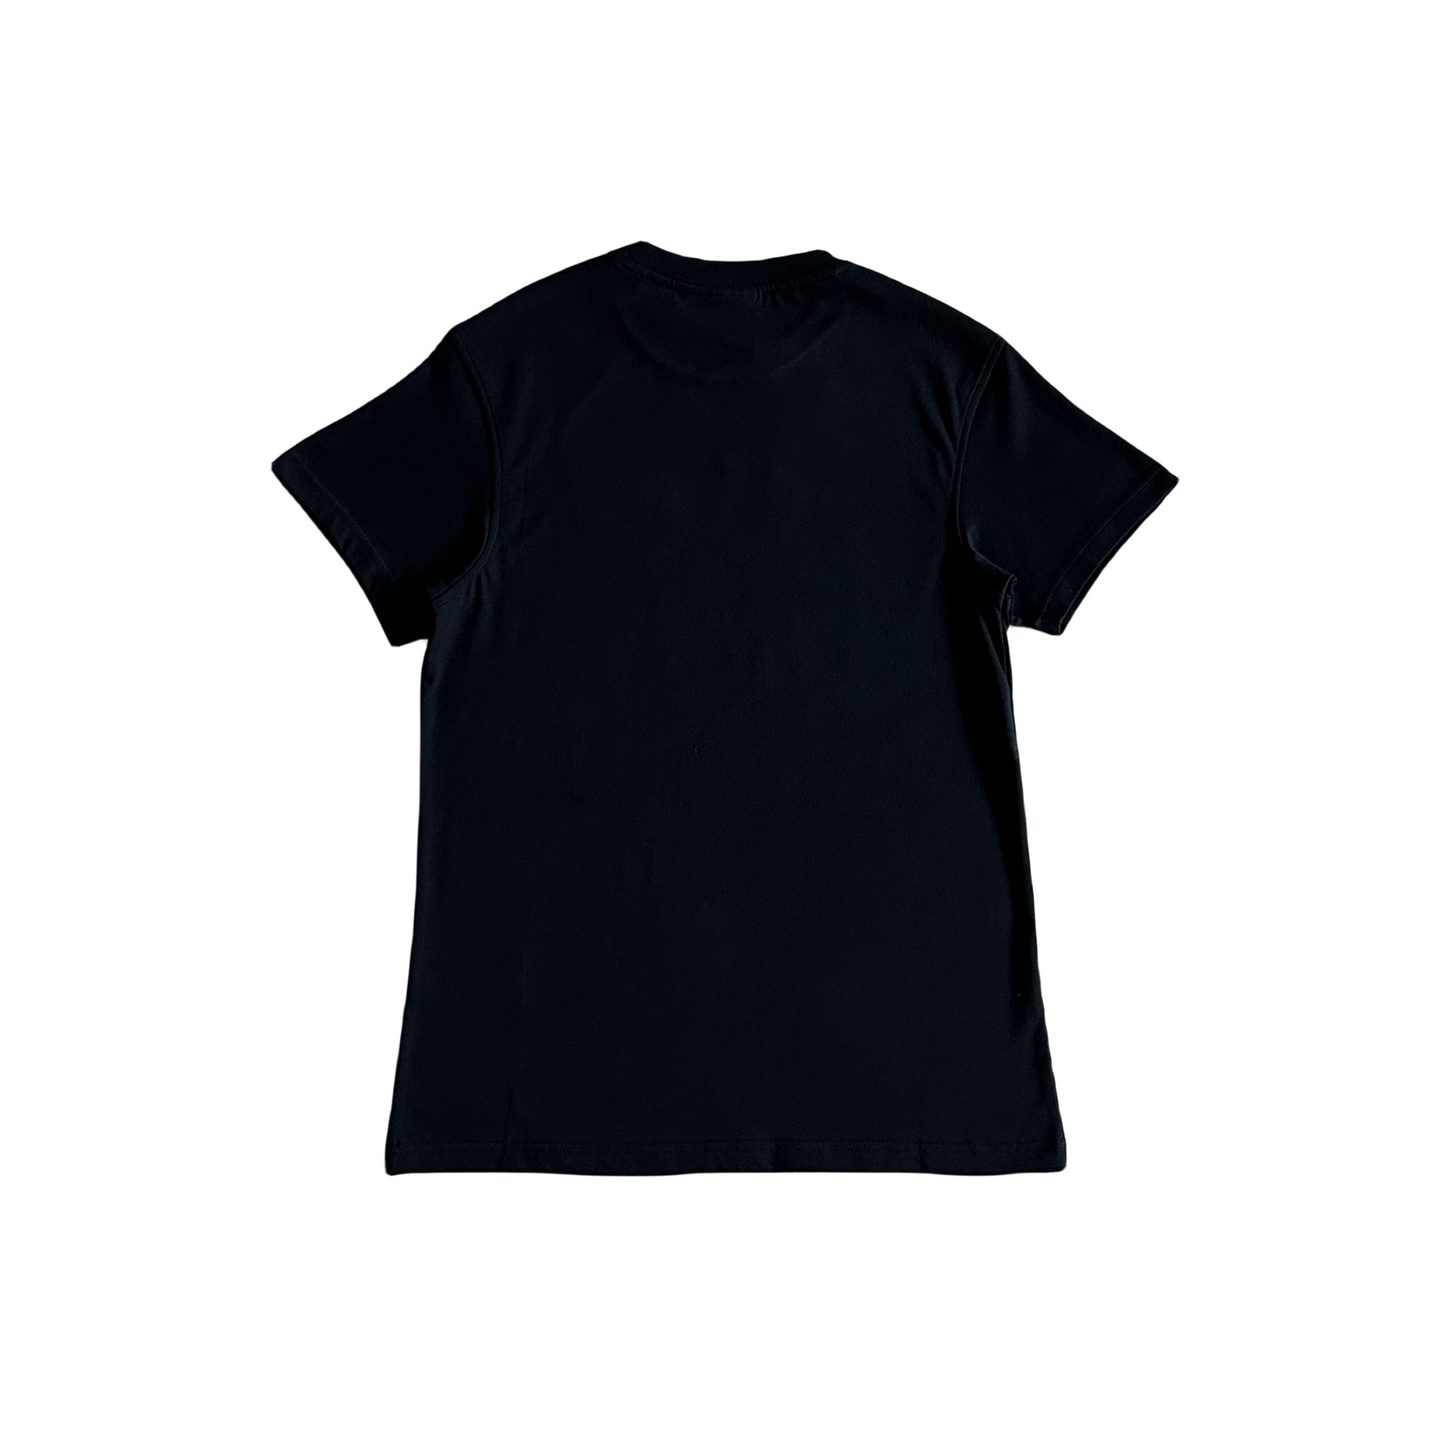 Syna World Chrome Tee Short Sleeve T-shirt - Black